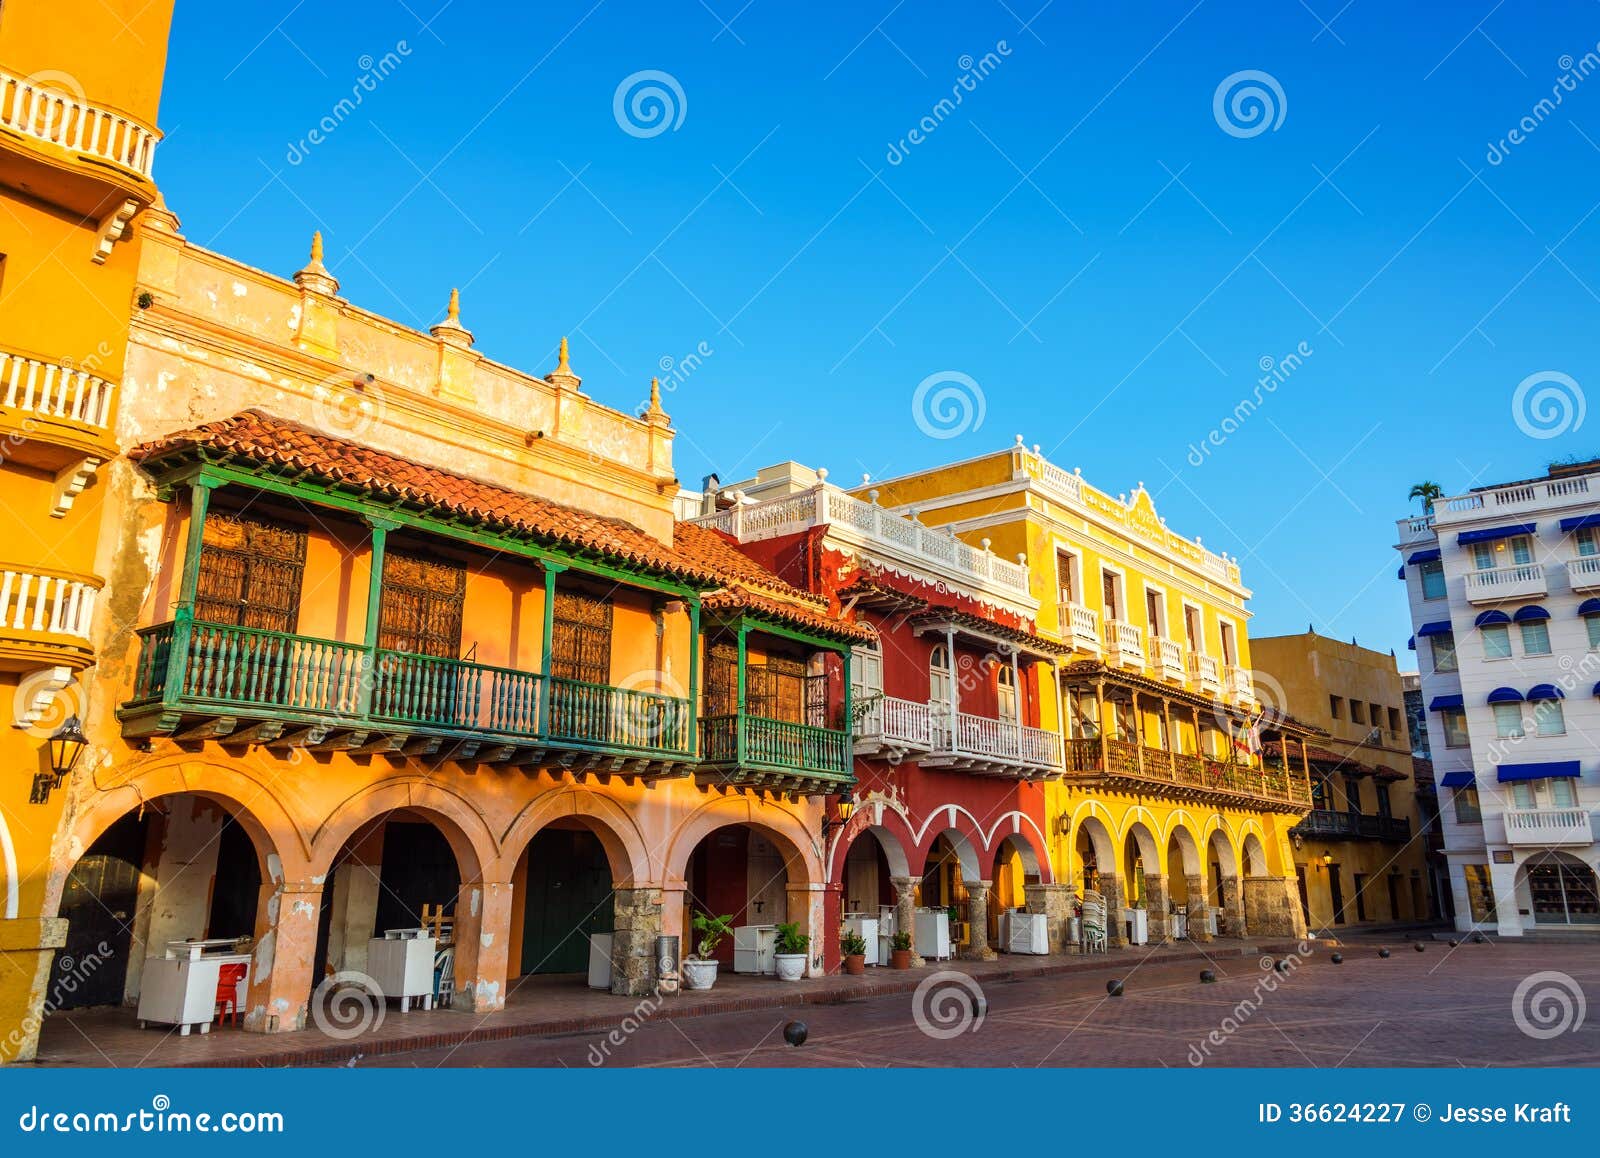 historic colonial facades